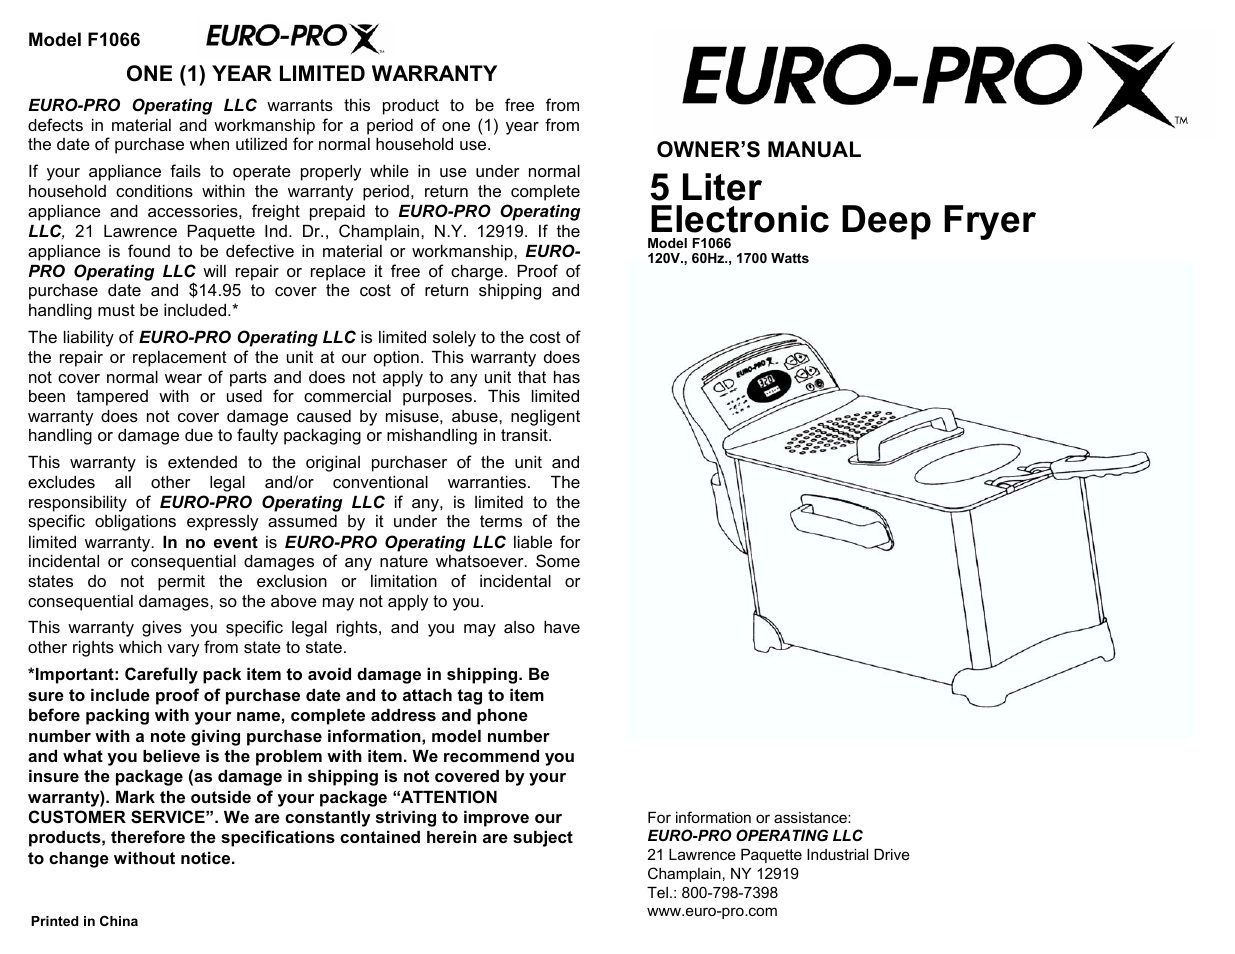 ELECTRONIC DEEP FRYER F1066